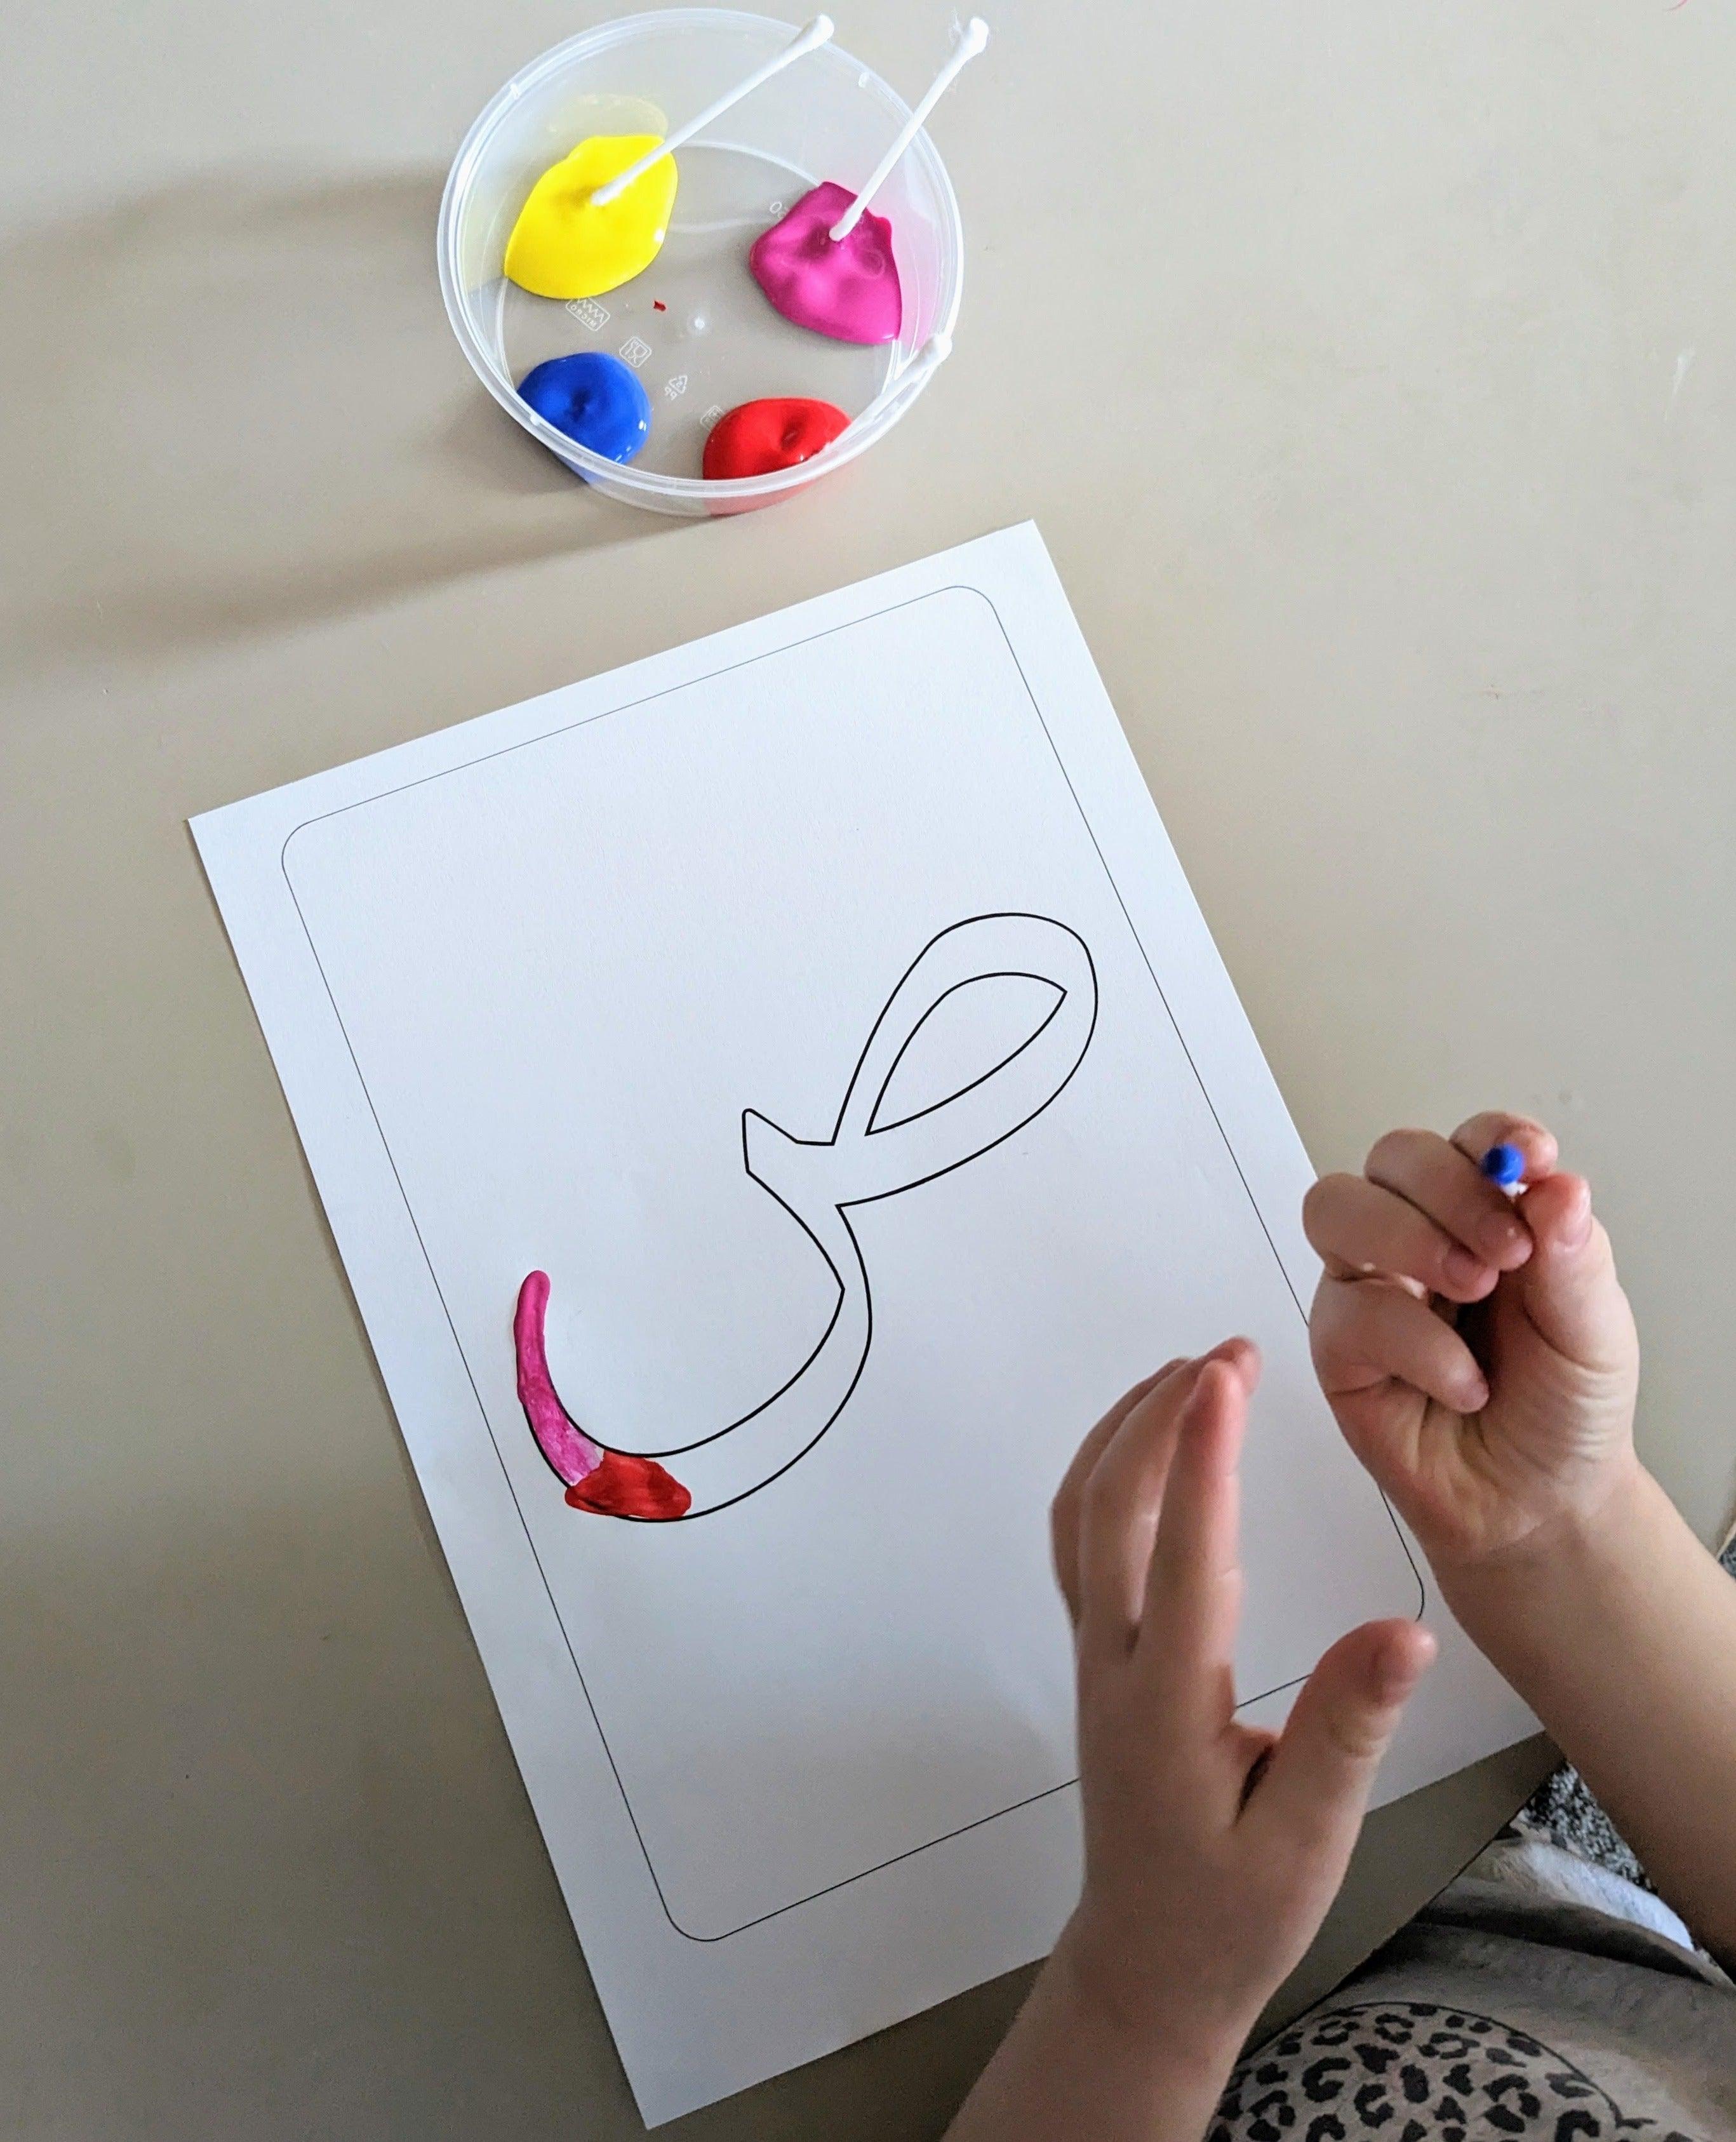 Large Arabic Letter Template Outlines - Free Printable - حروف عربية كبيرة لأنشطة الحسية مجانًا - Arabic Joy